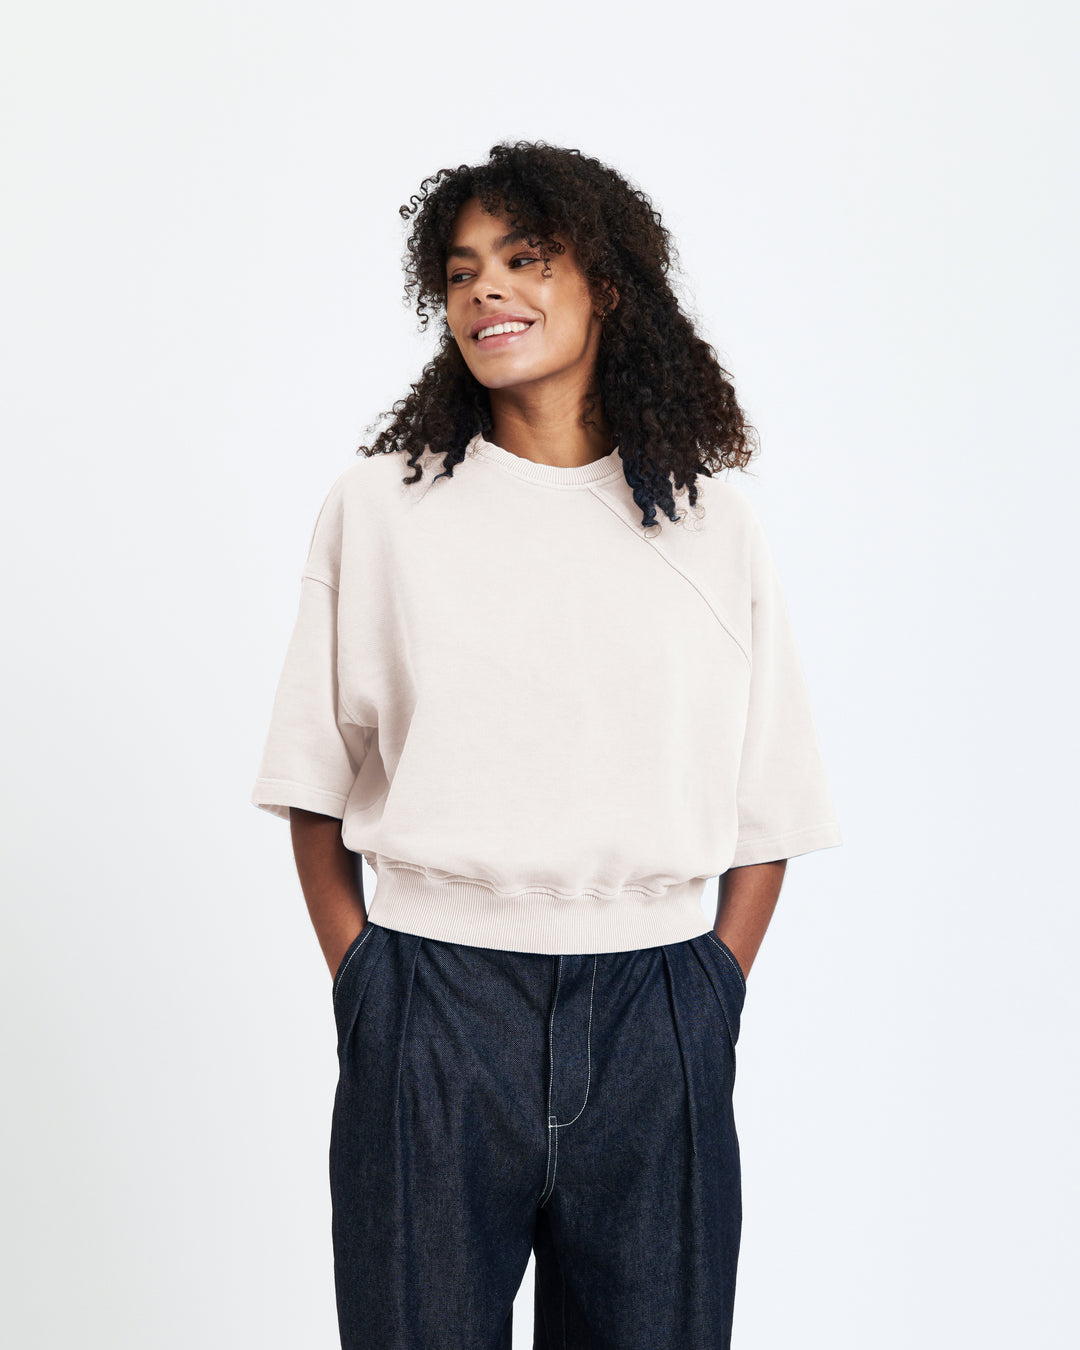 New Optimist womenswear Maltese Ray | Short sleeve crew Crewneck